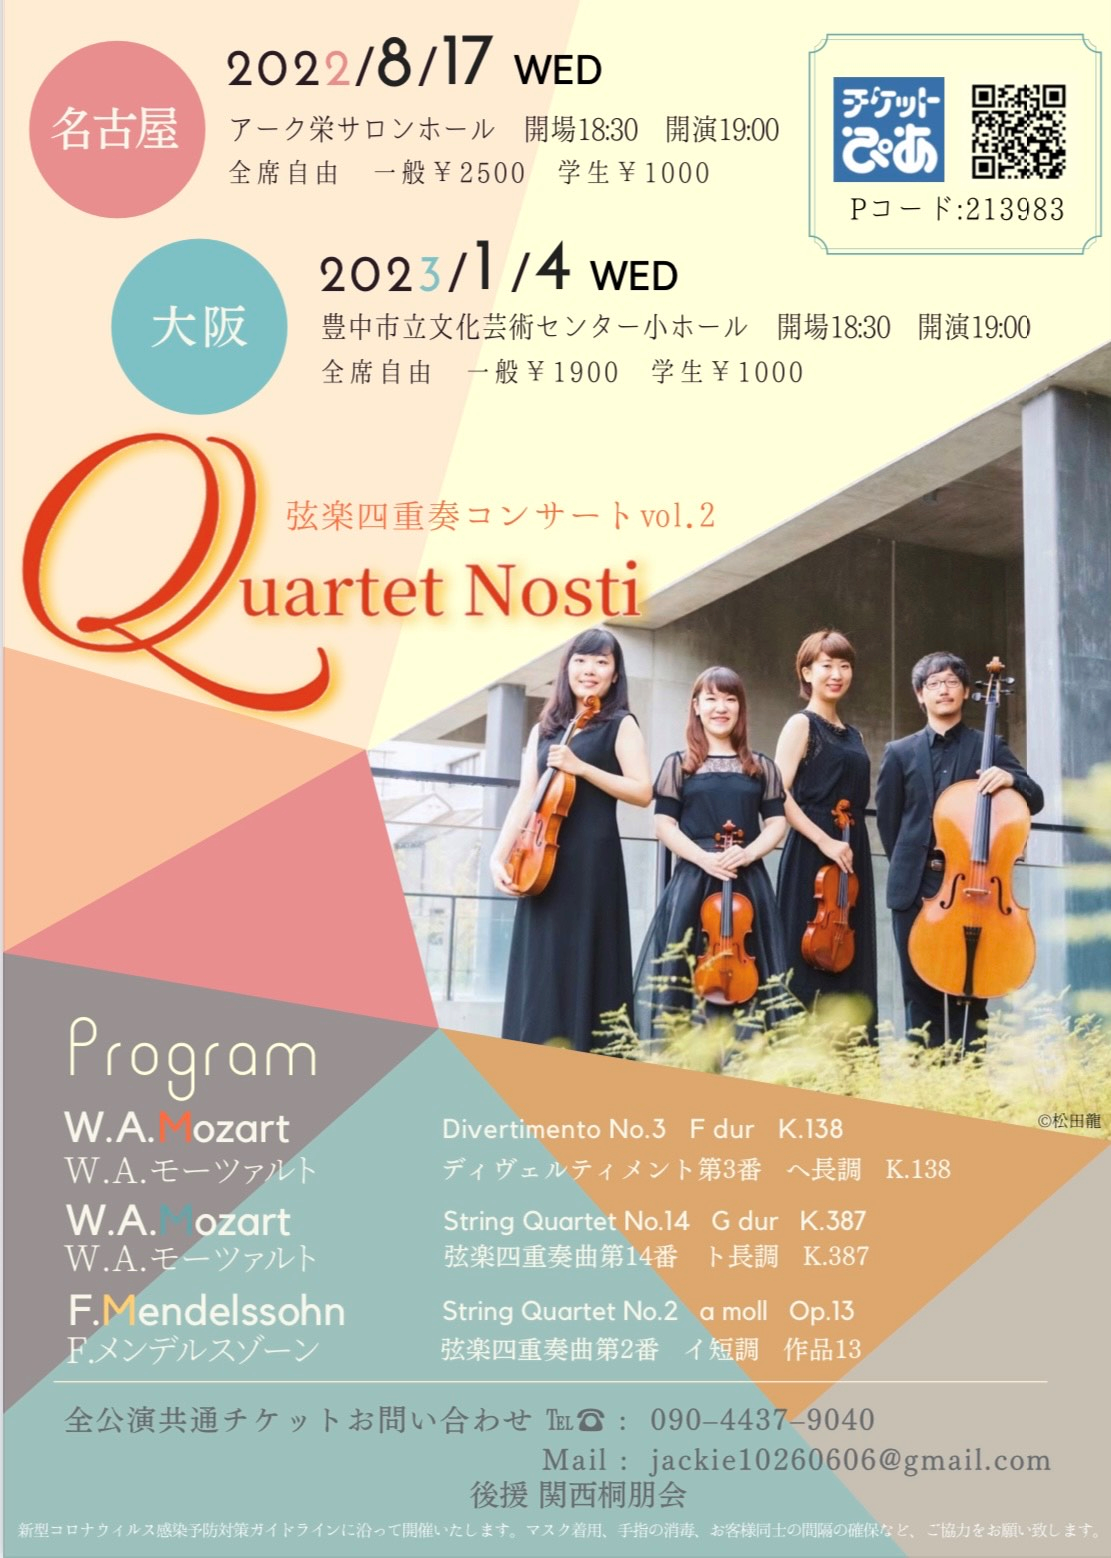 Quartet Nosti 弦楽四重奏コンサート vol.2